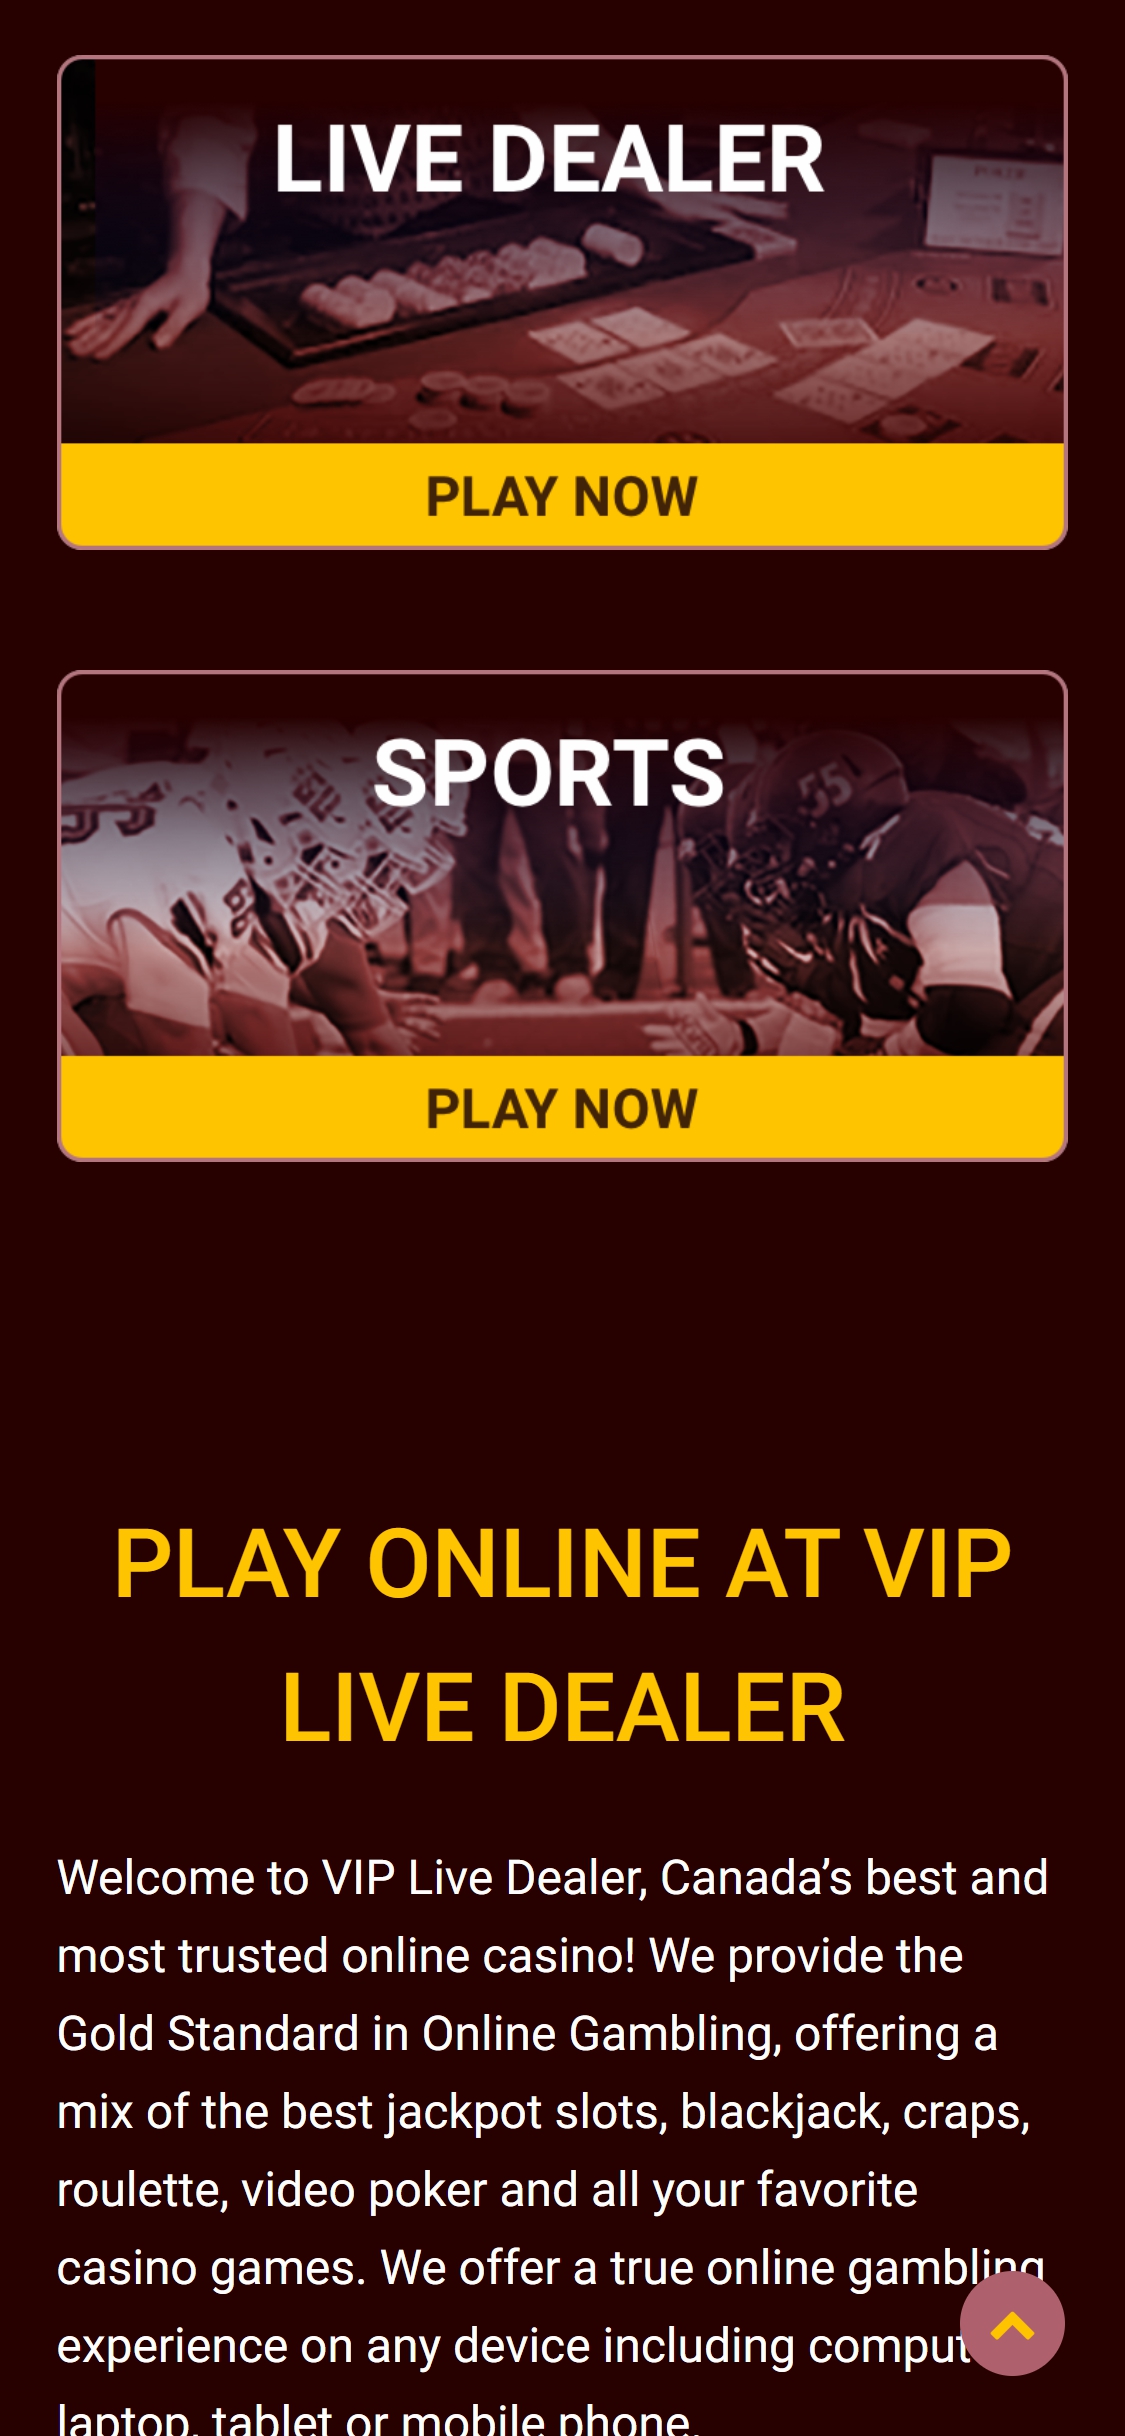 Vip Casino Mobile Live Dealer Games Review